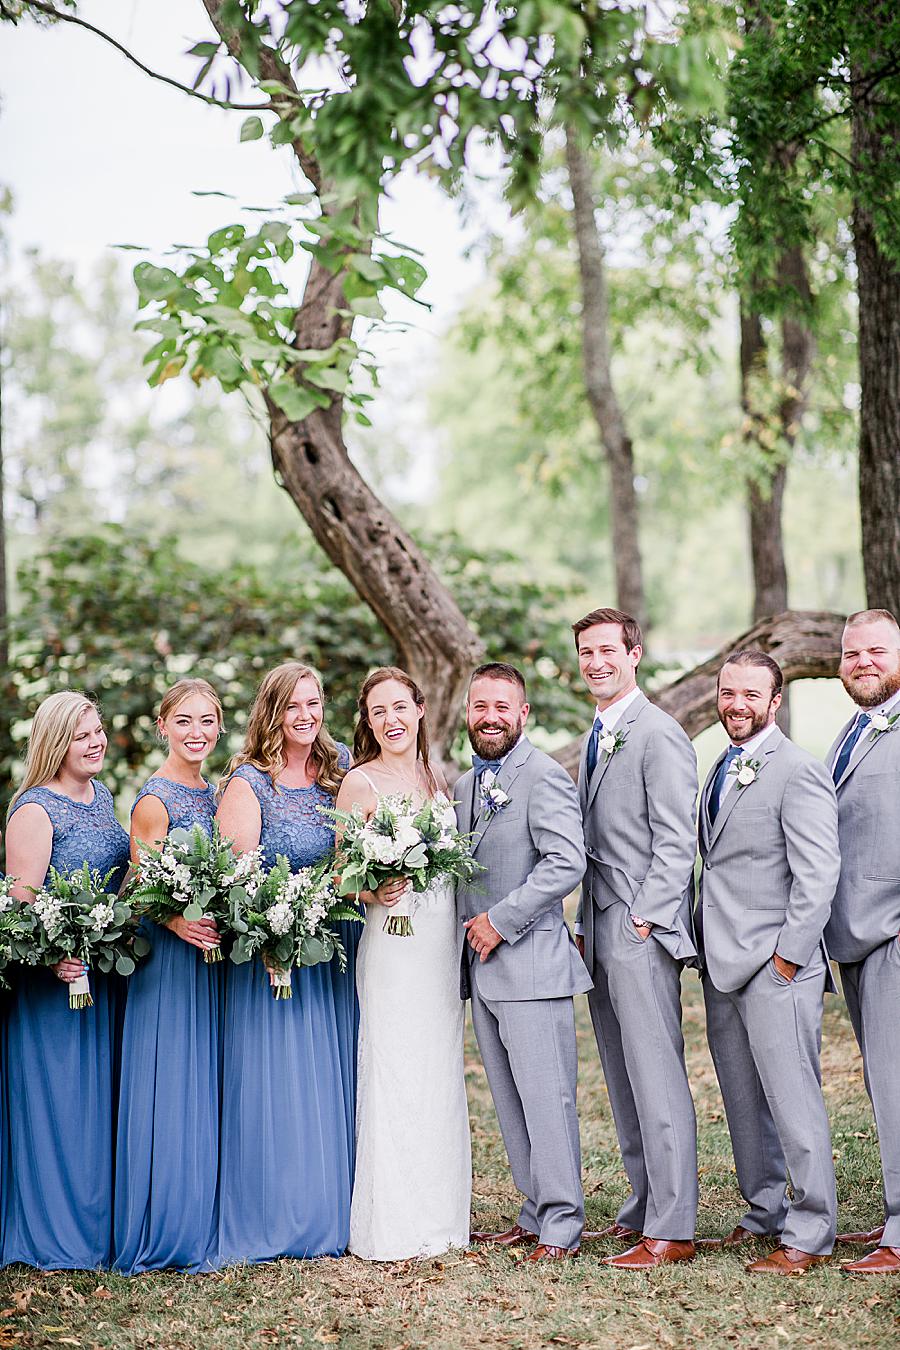 Gray tuxedos at this Marblegate Farm Wedding by Knoxville Wedding Photographer, Amanda May Photos.